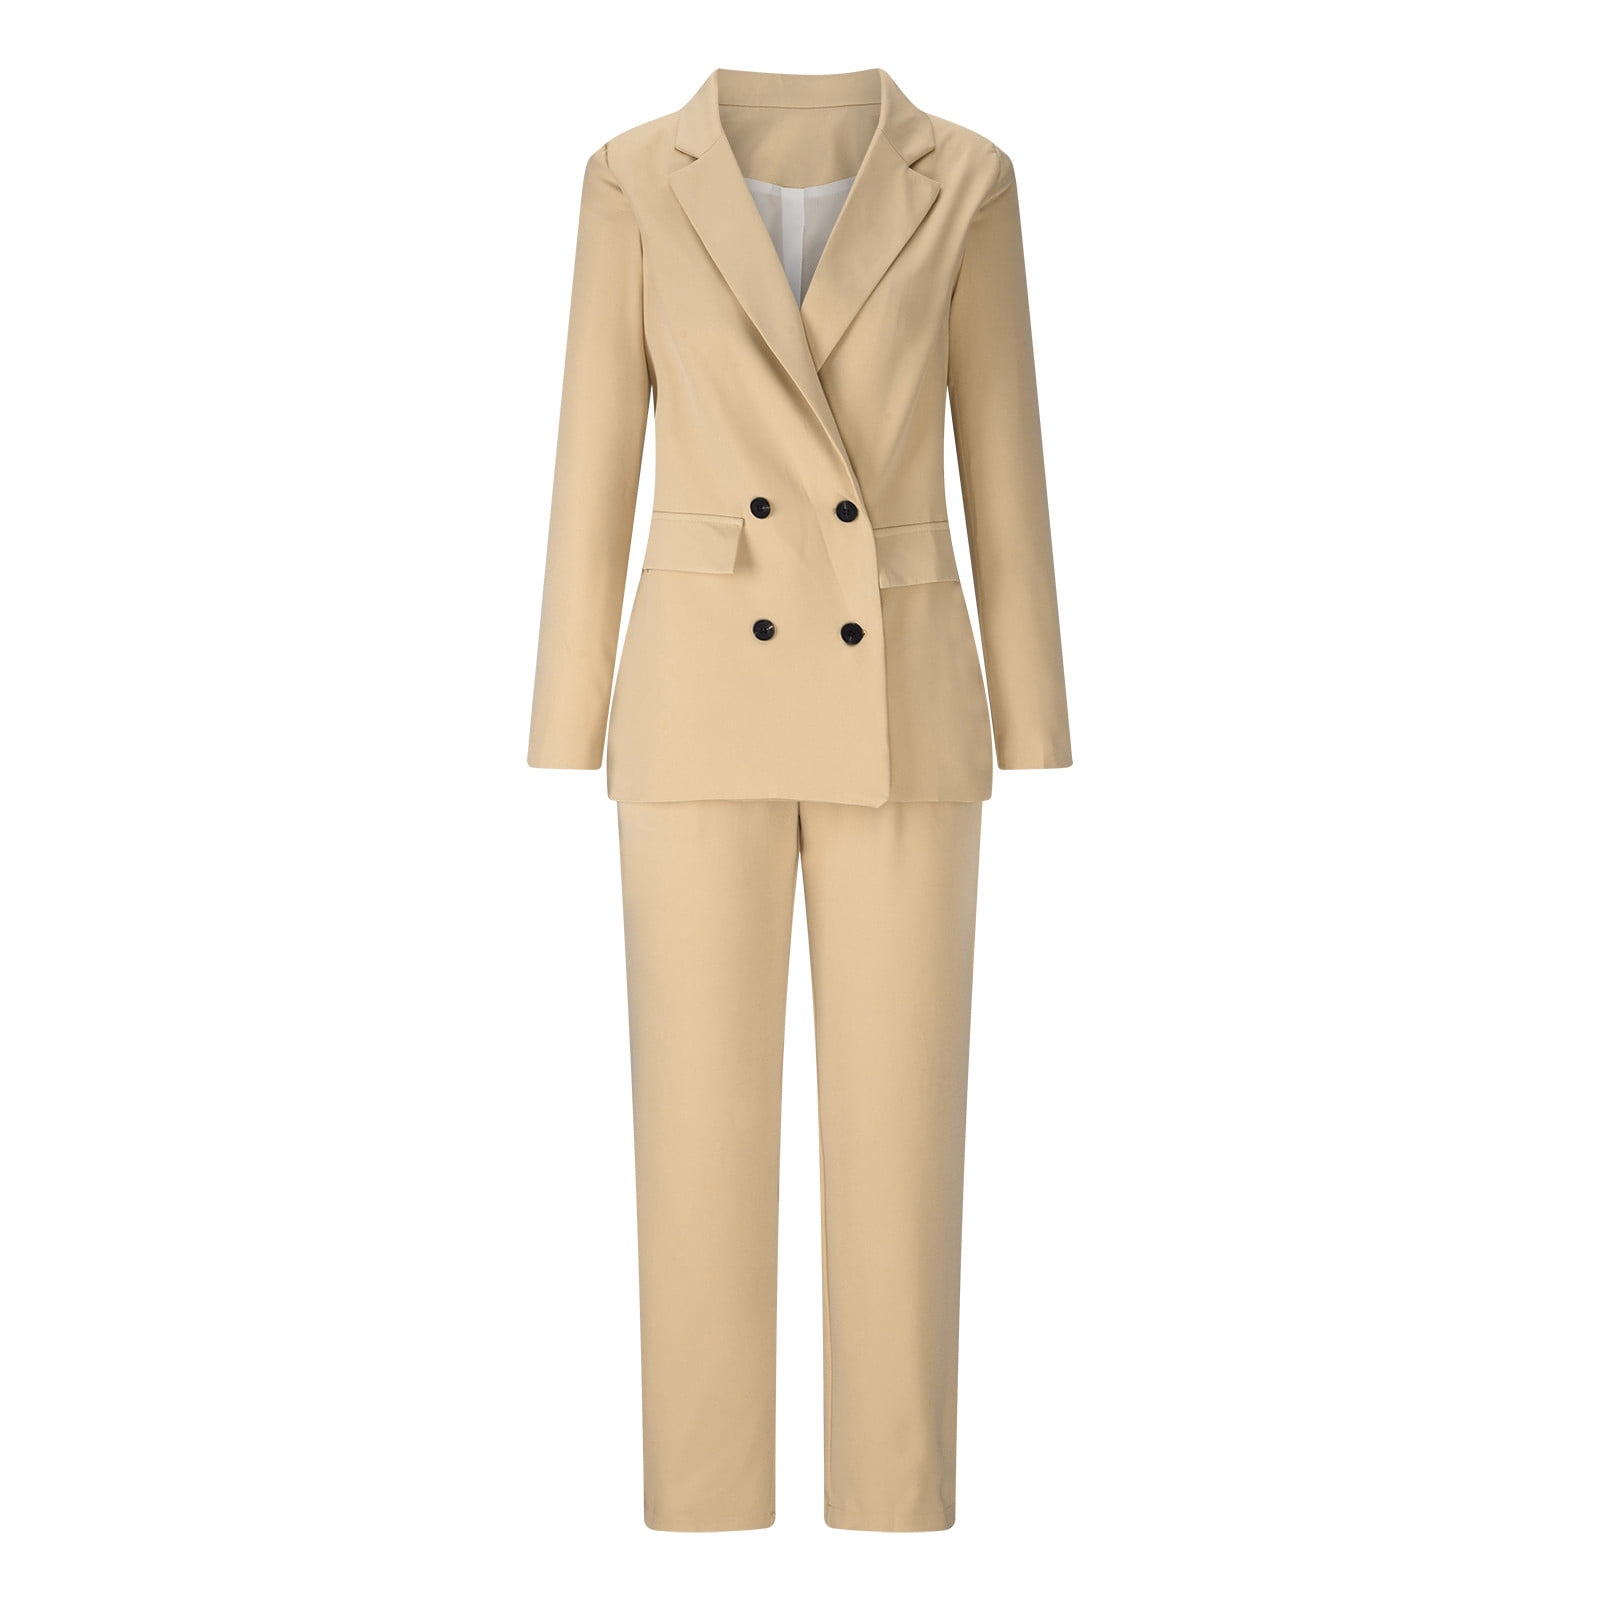  Beige Women's 3 Piece Suit Lady Business Casual Office Pant  Suits for Women Dressy One Button Slim Fit Blazer Jacket Vest Pants Set  Custom Size : Clothing, Shoes & Jewelry